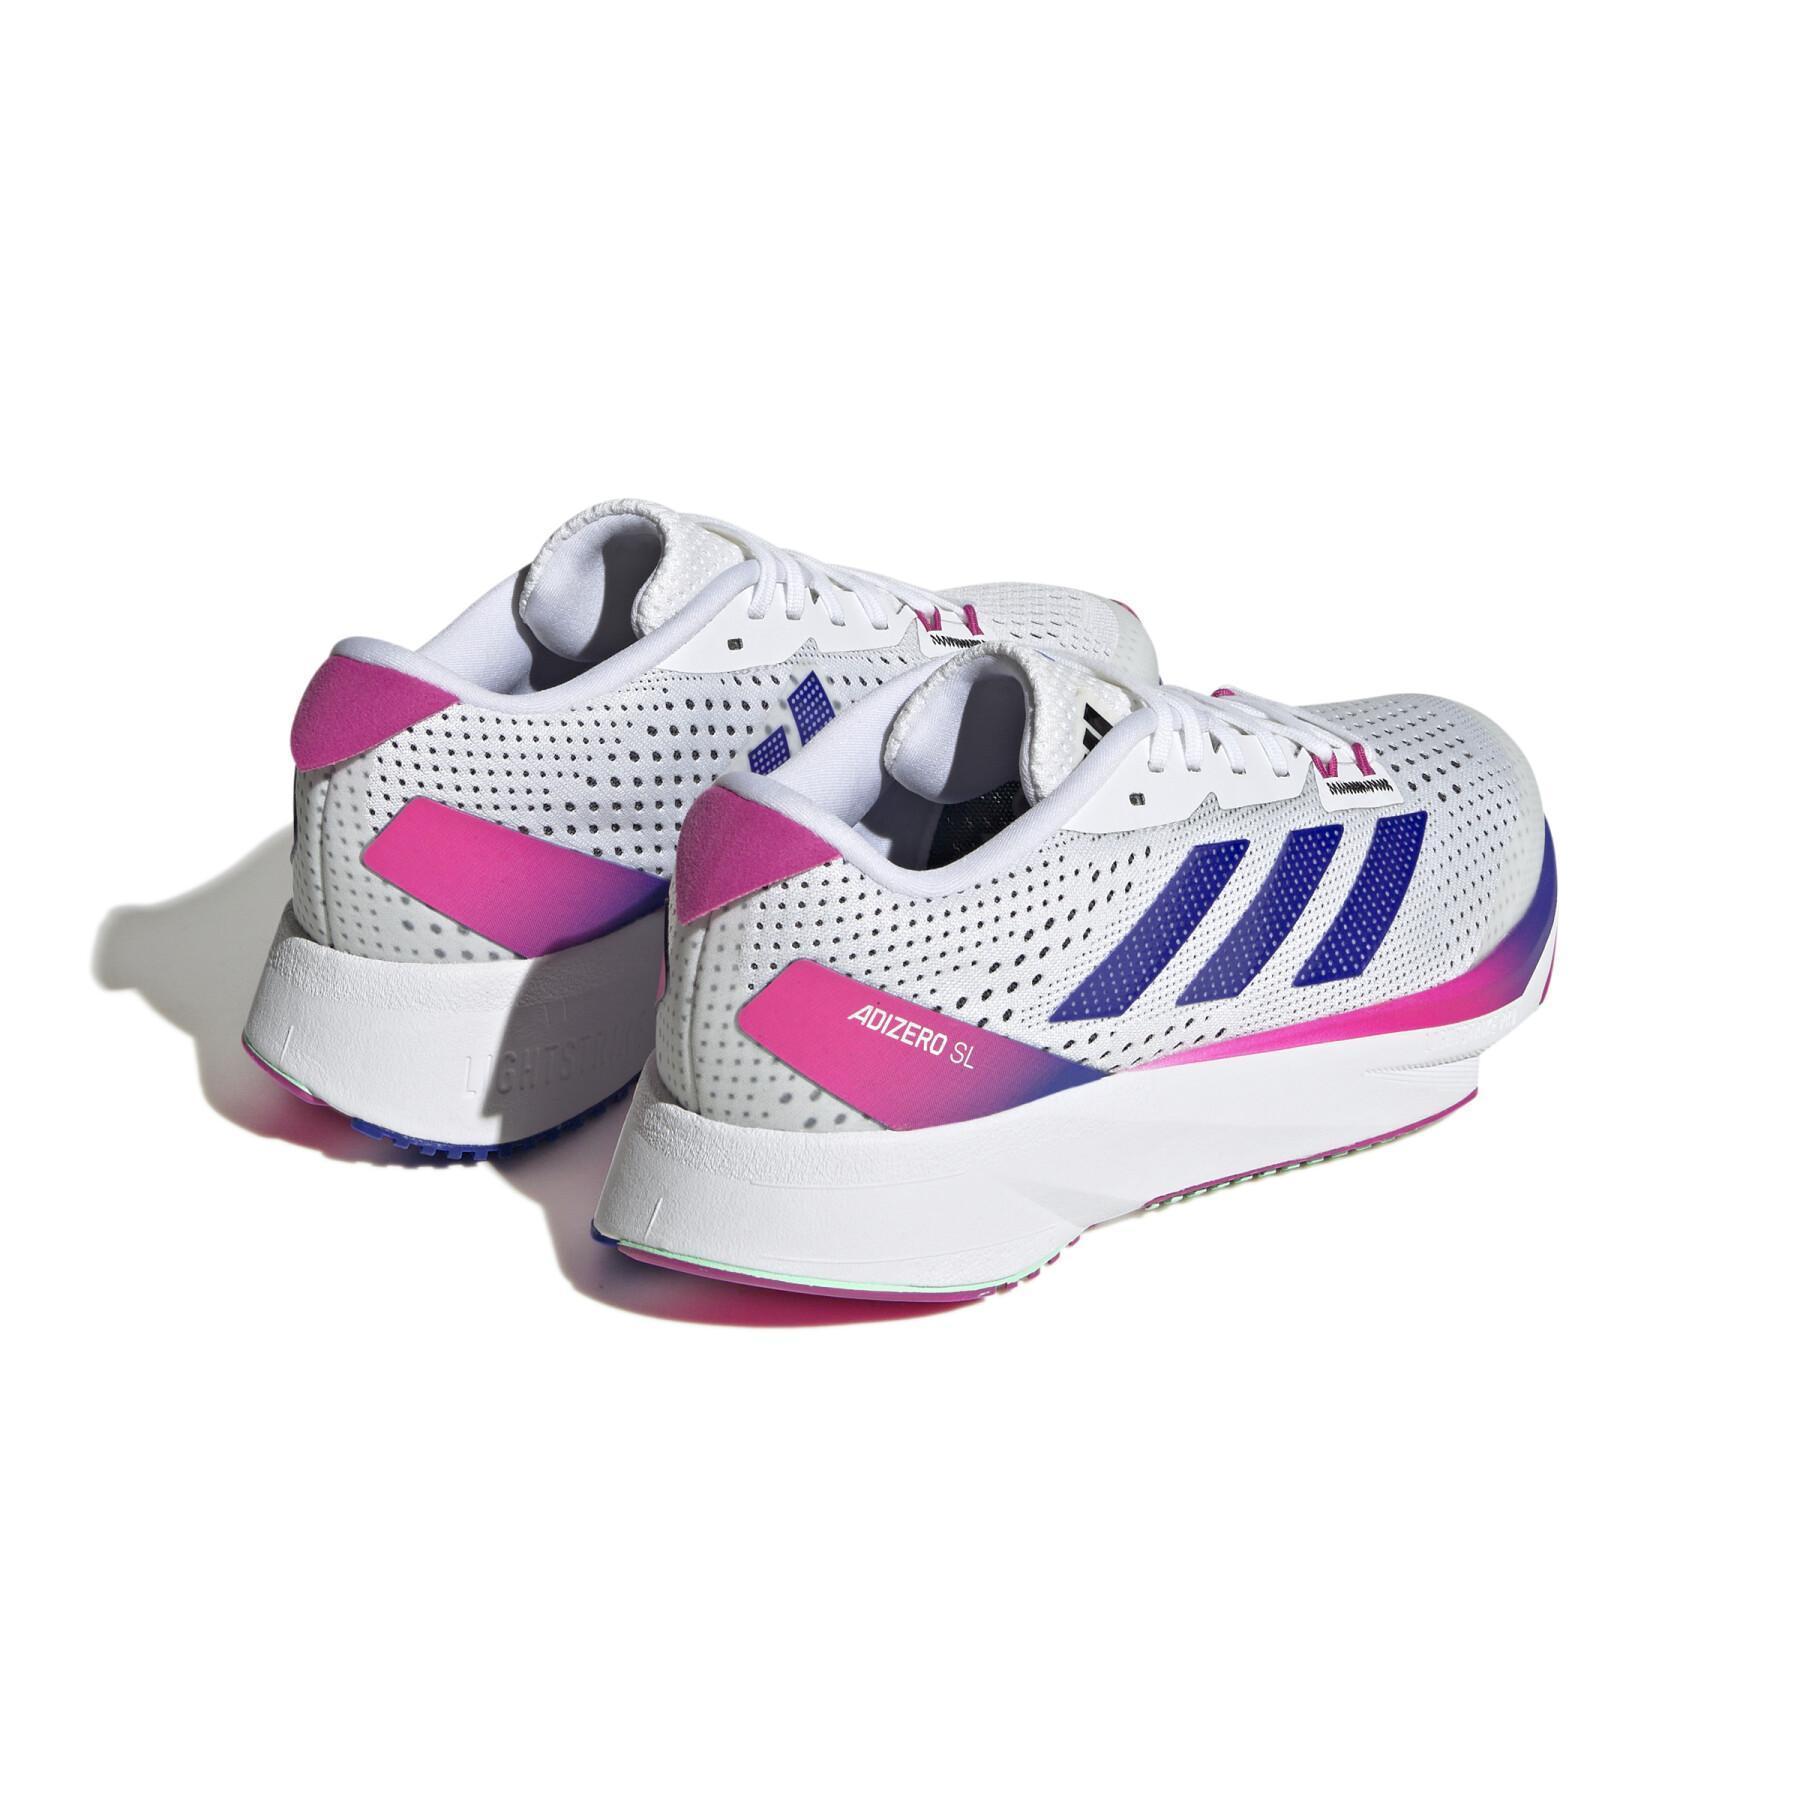  running zapatos para niños adidas Adizero SL